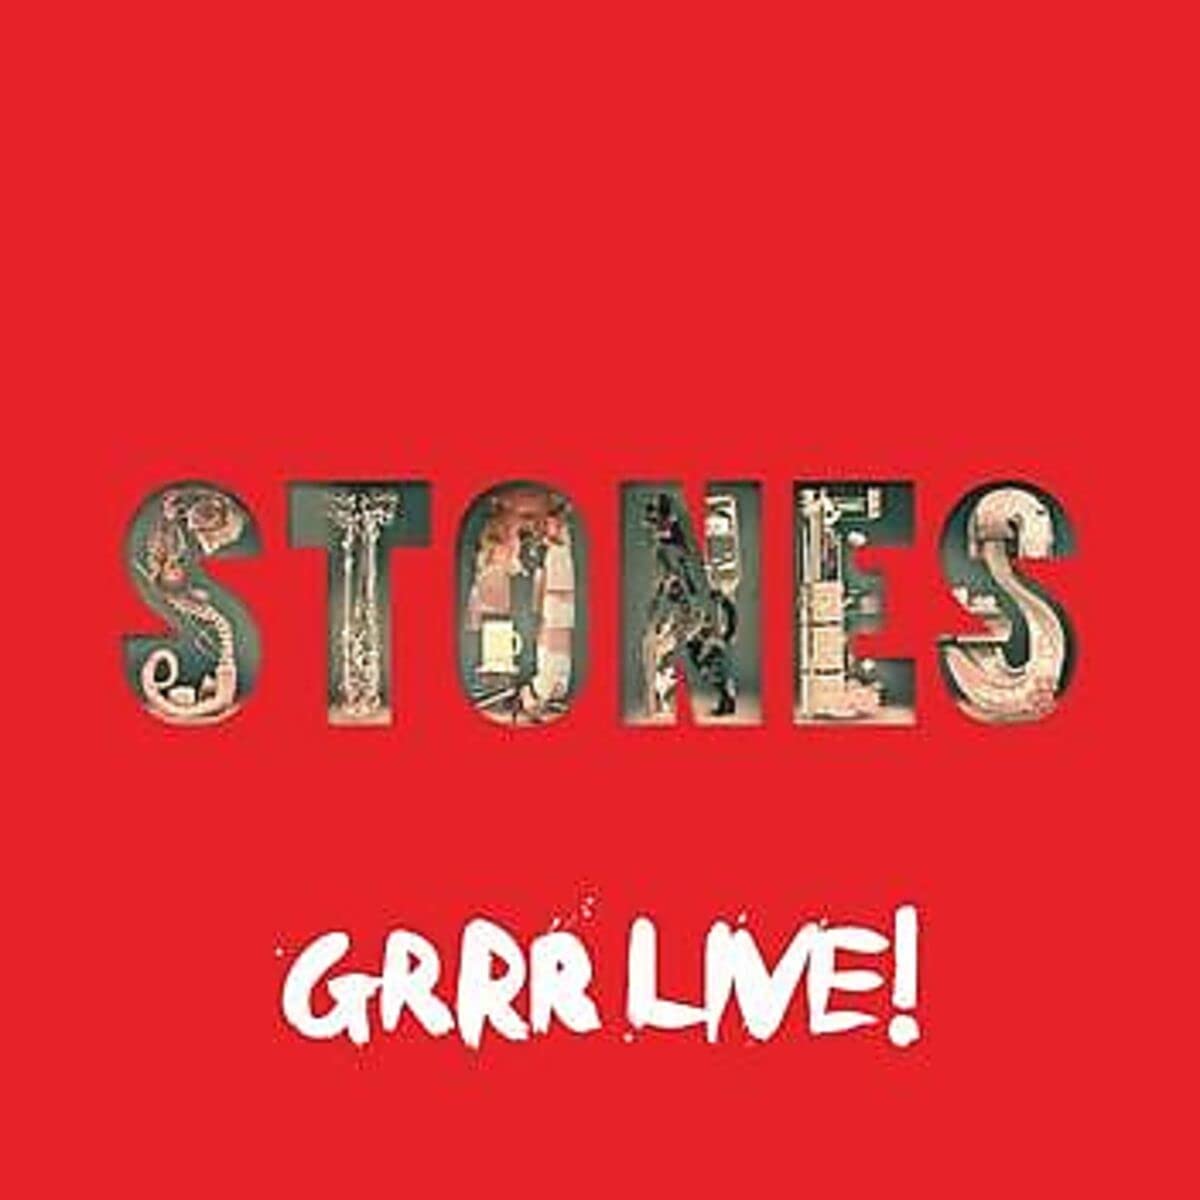 Rolling Stones Grrr! Live CD cover